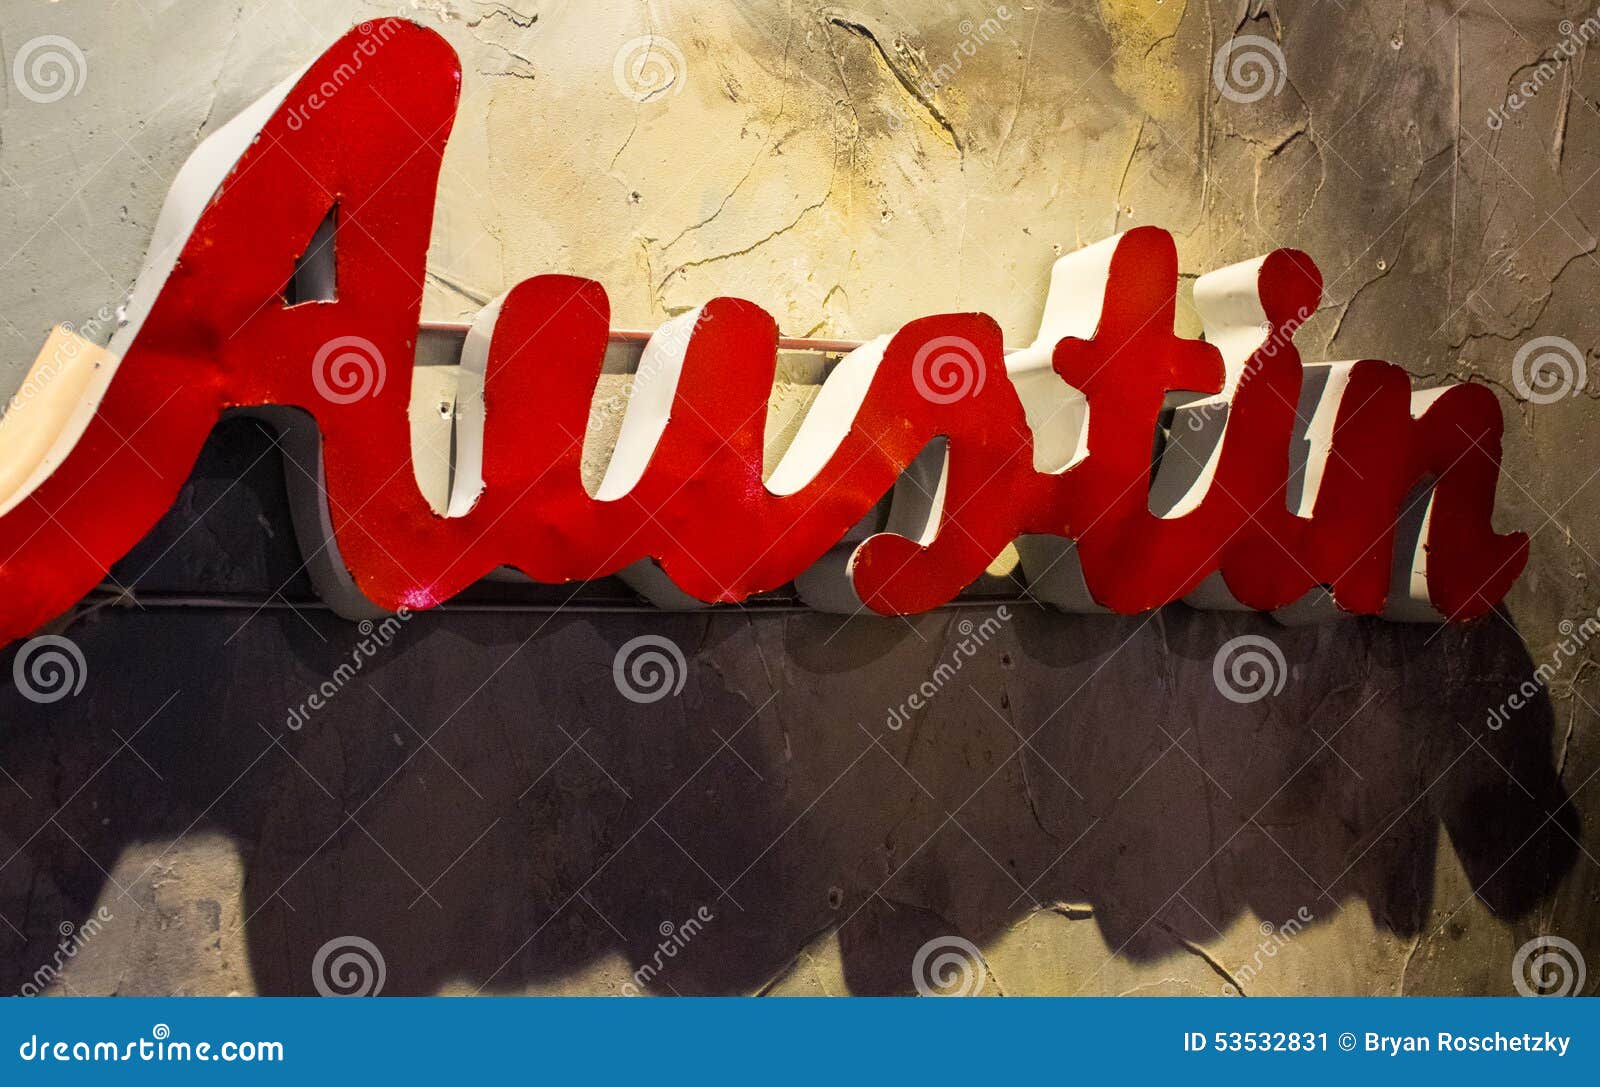 austin texas metal sign hanging wall close up angle